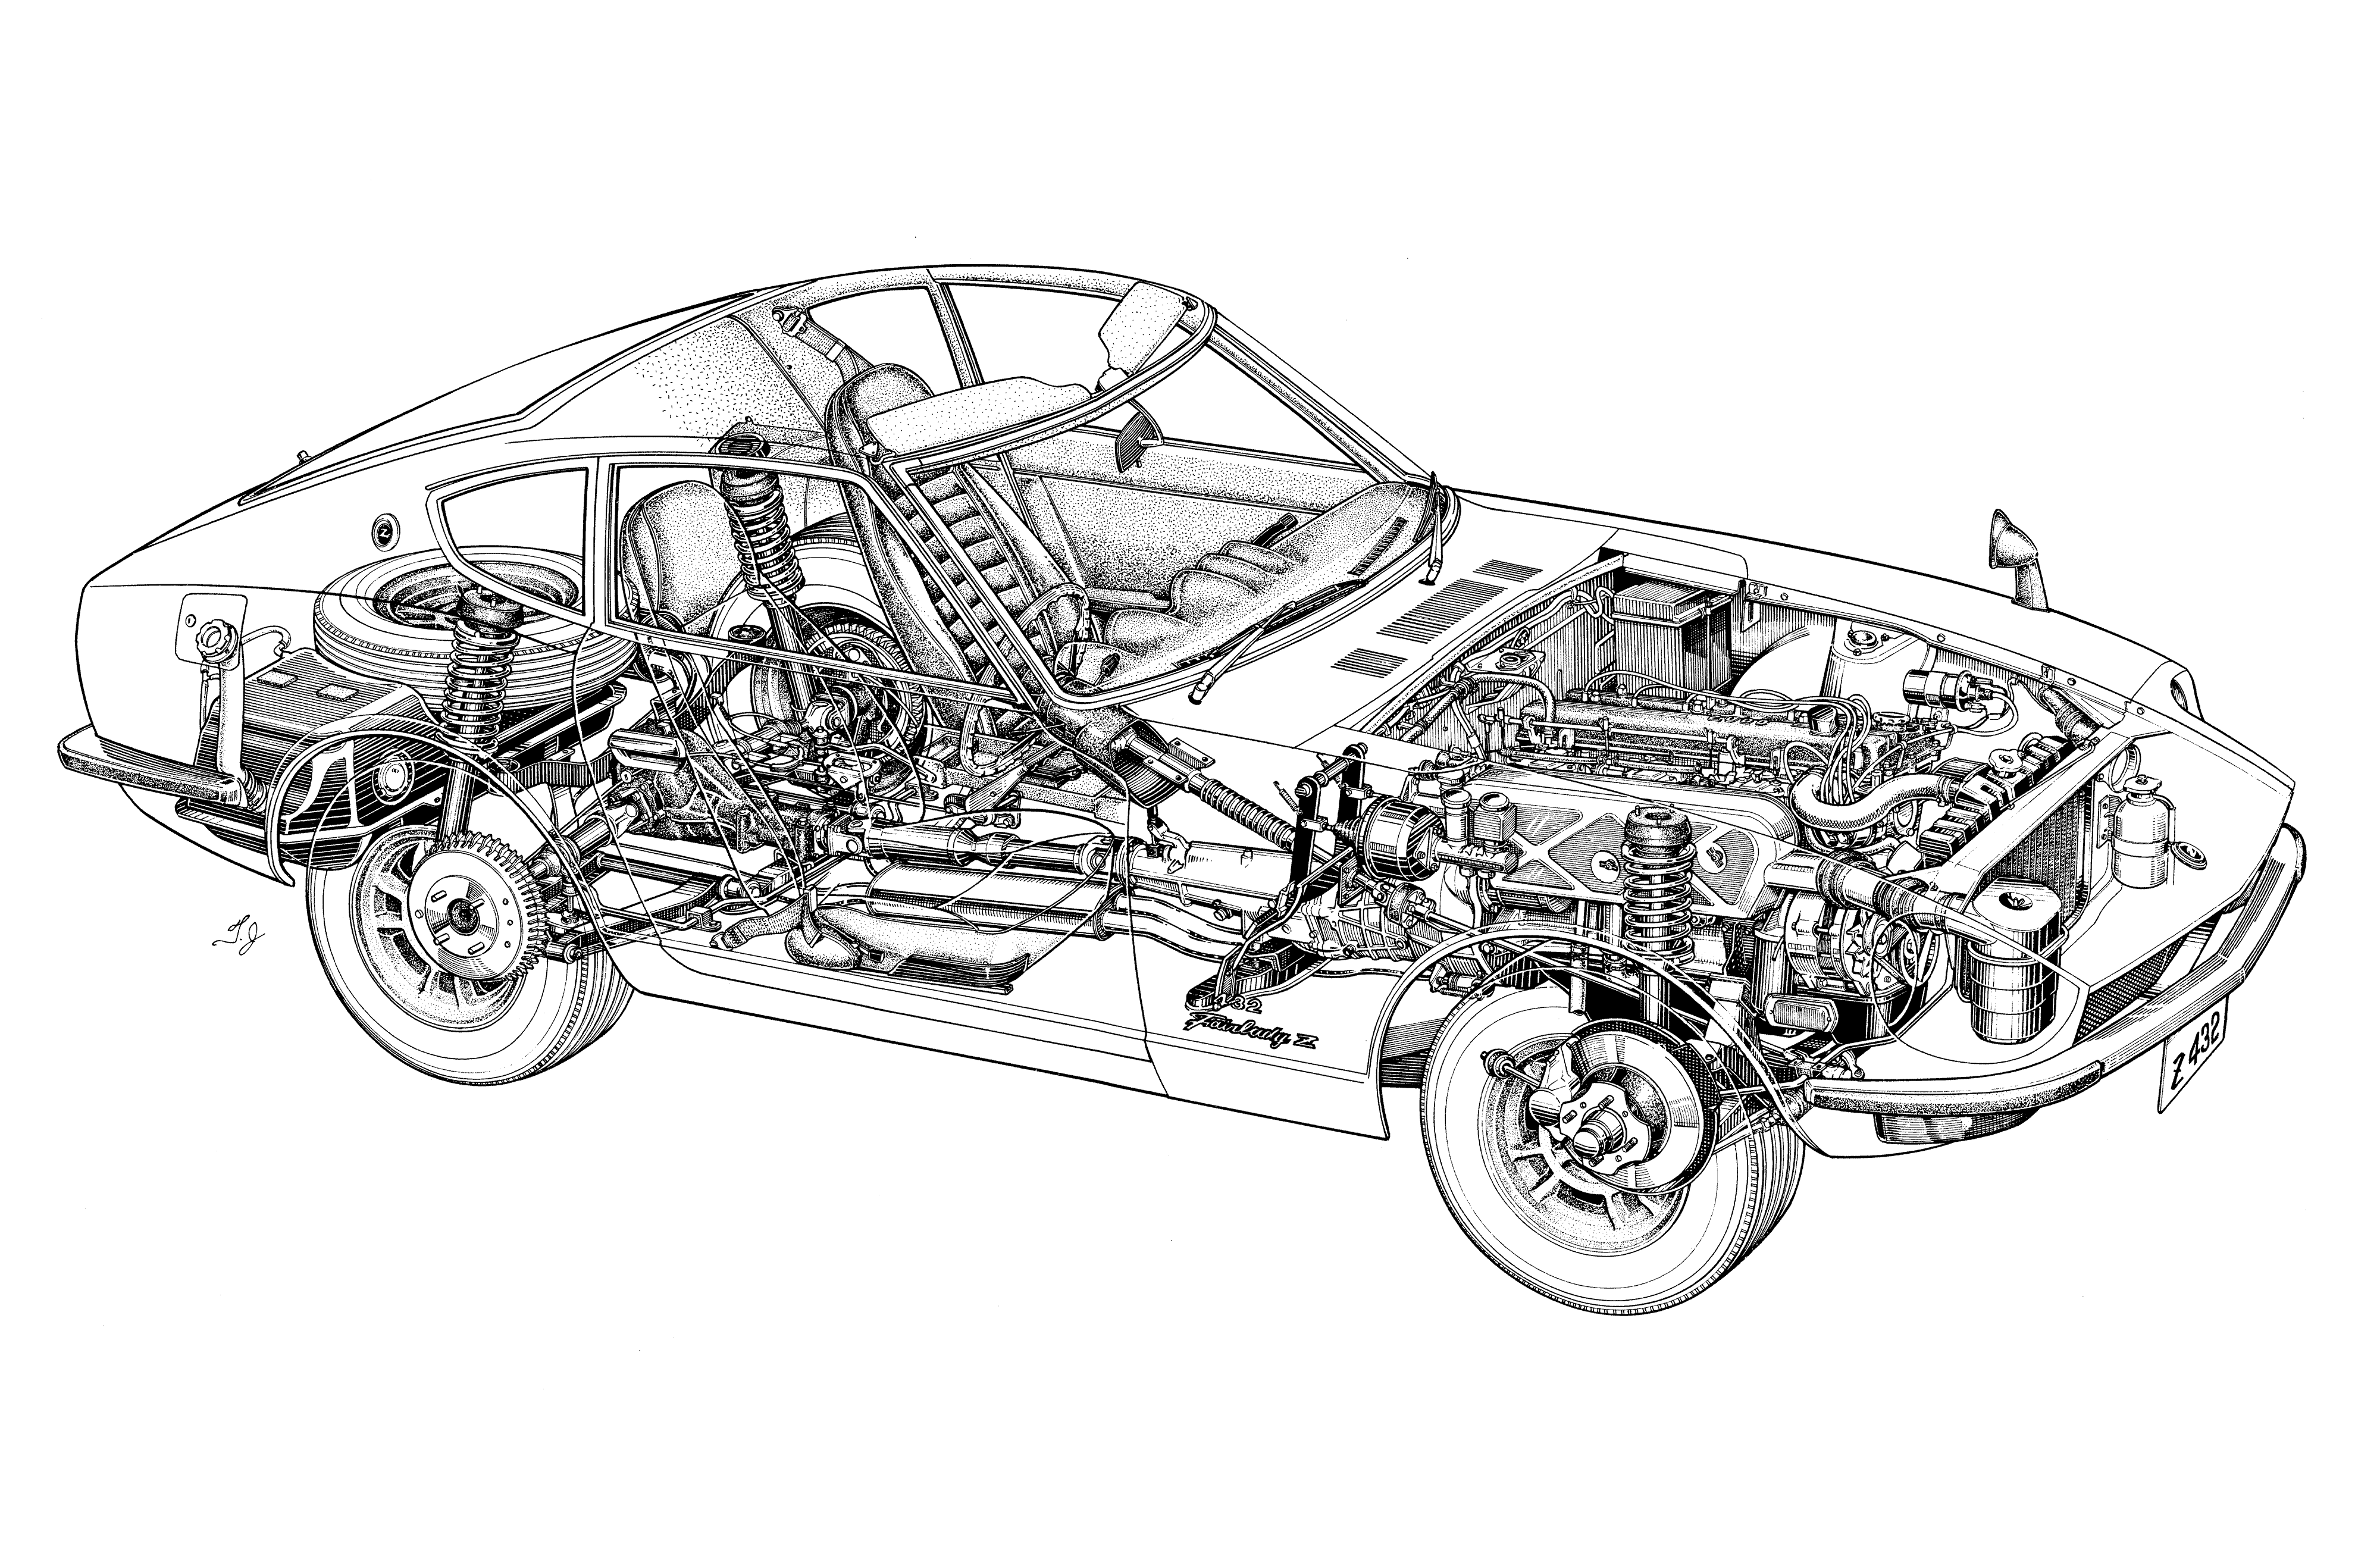 Nissan Fairlady cutaway drawing